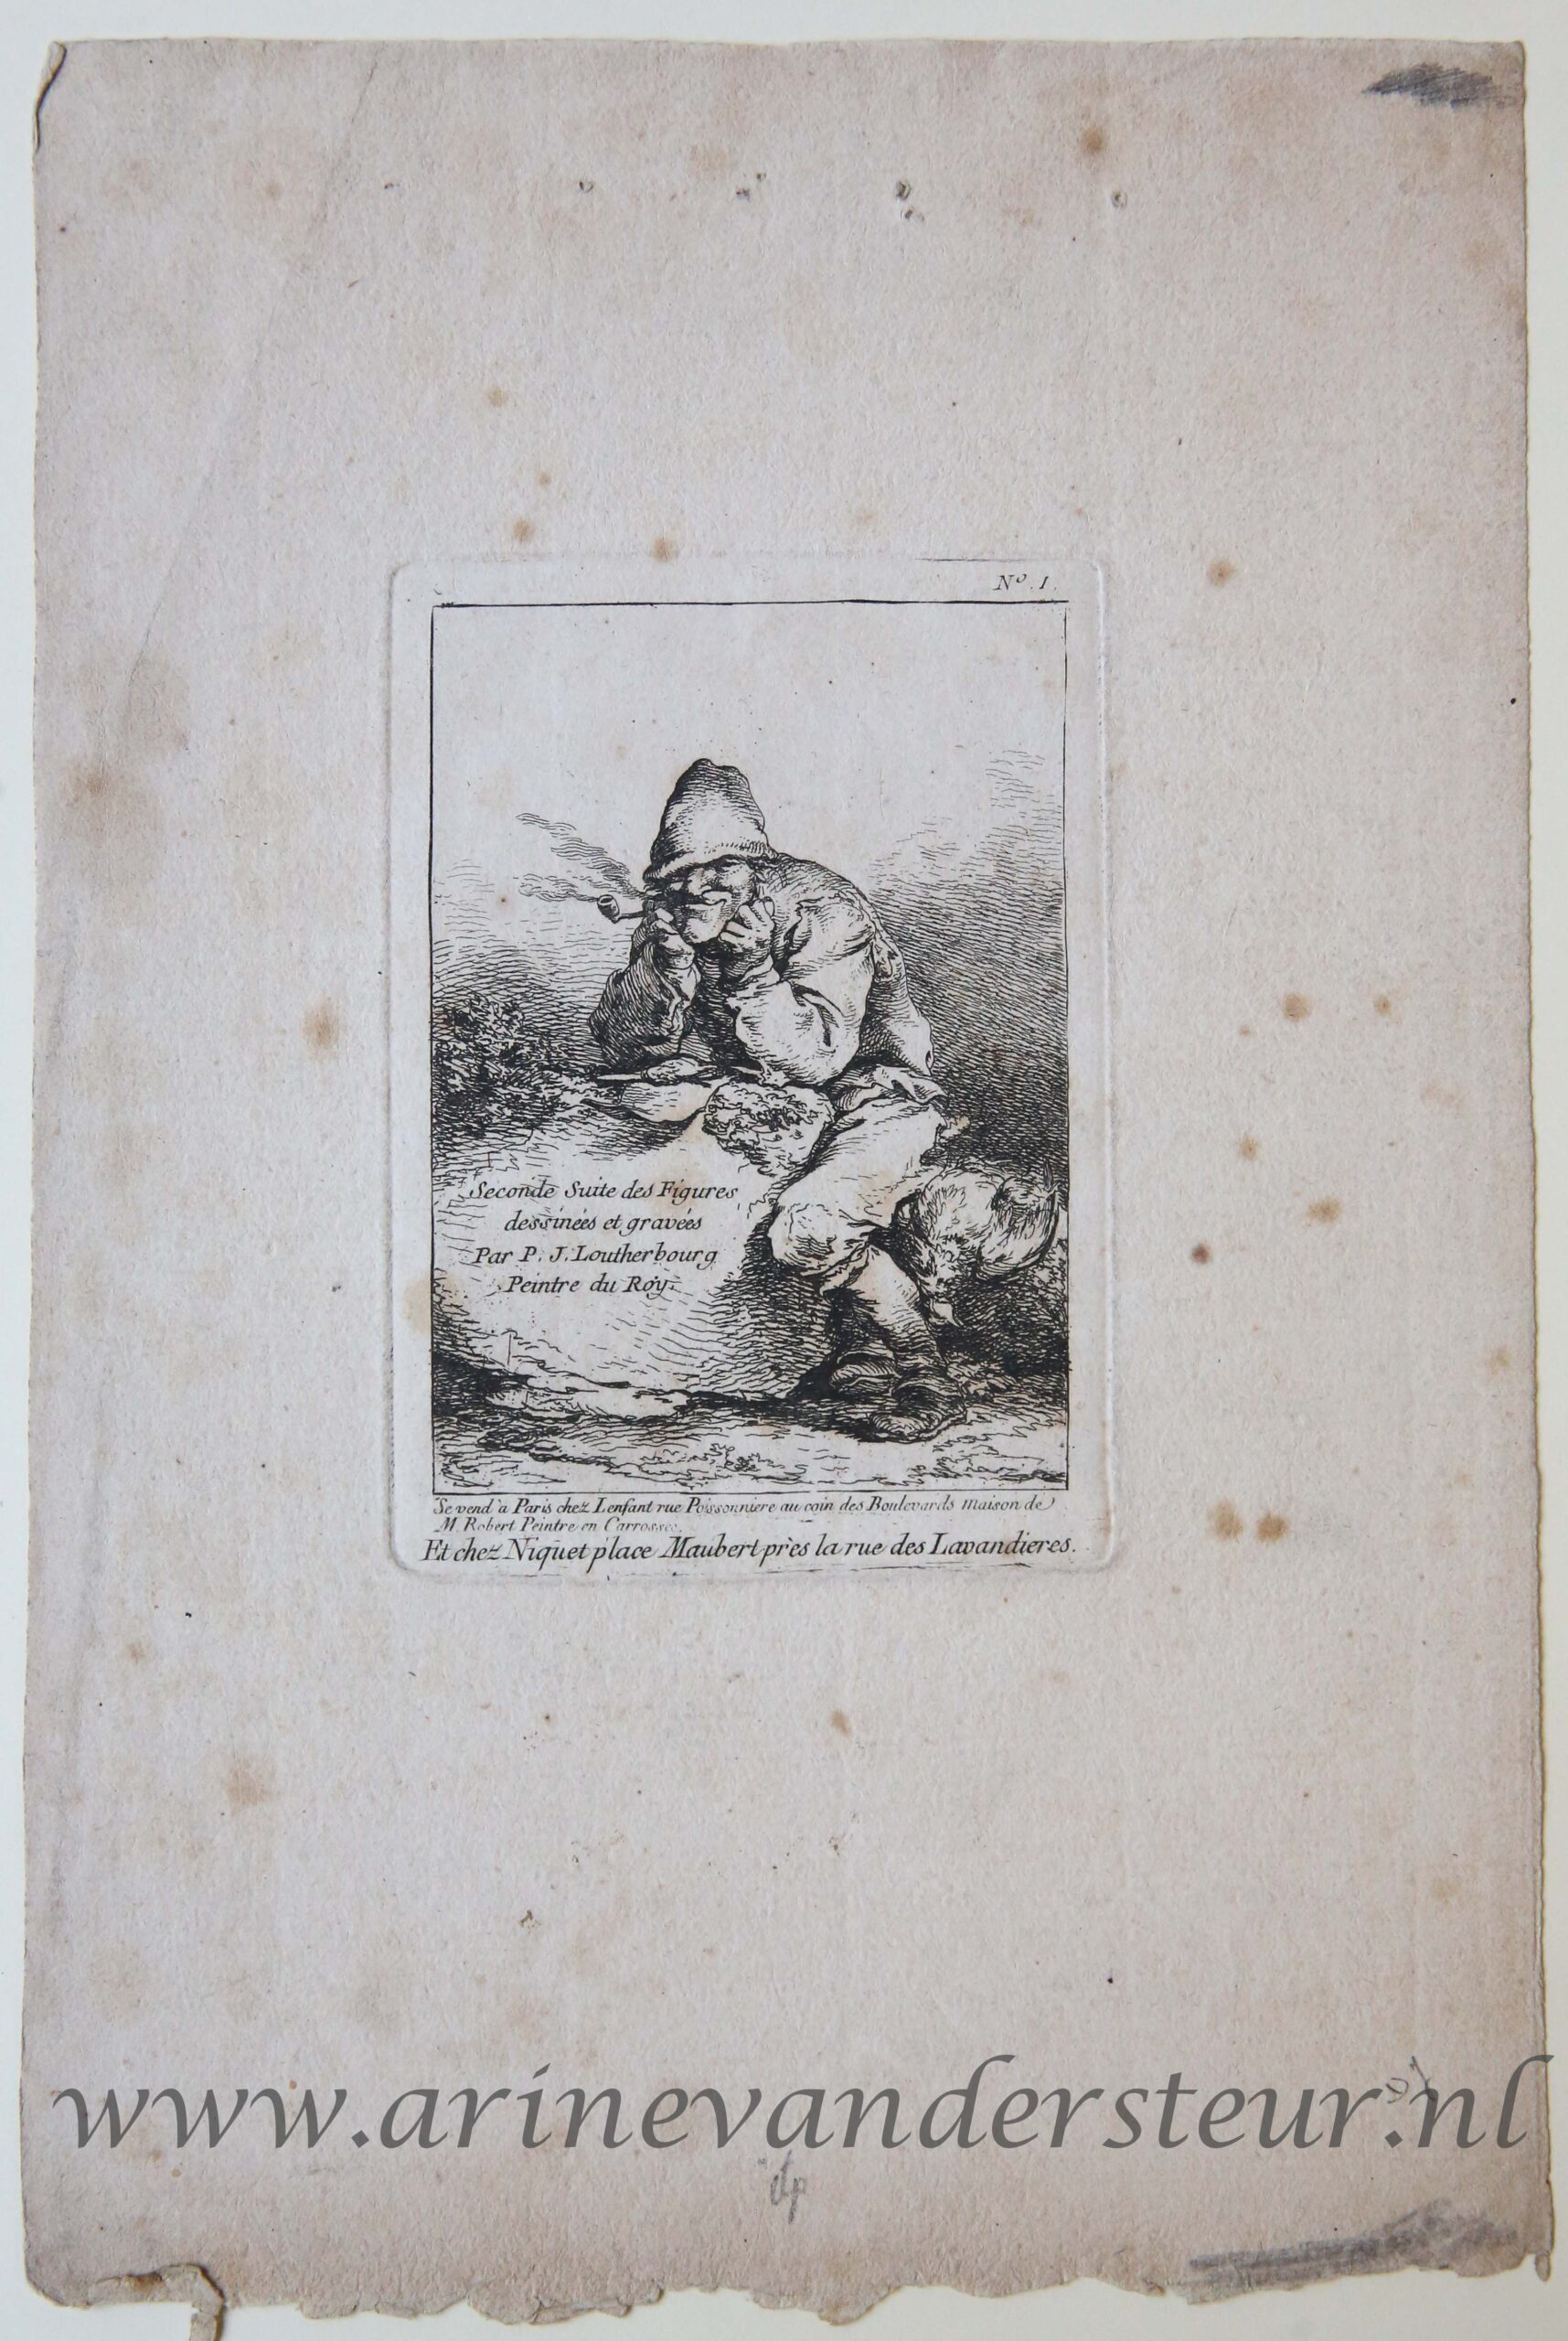 [Antique title page, ca. 1755/71] Man smoking a pipe / Titelprent met pijprokende man [Seconde suite des Figures...], published ca. 1755-1771, 1 p.